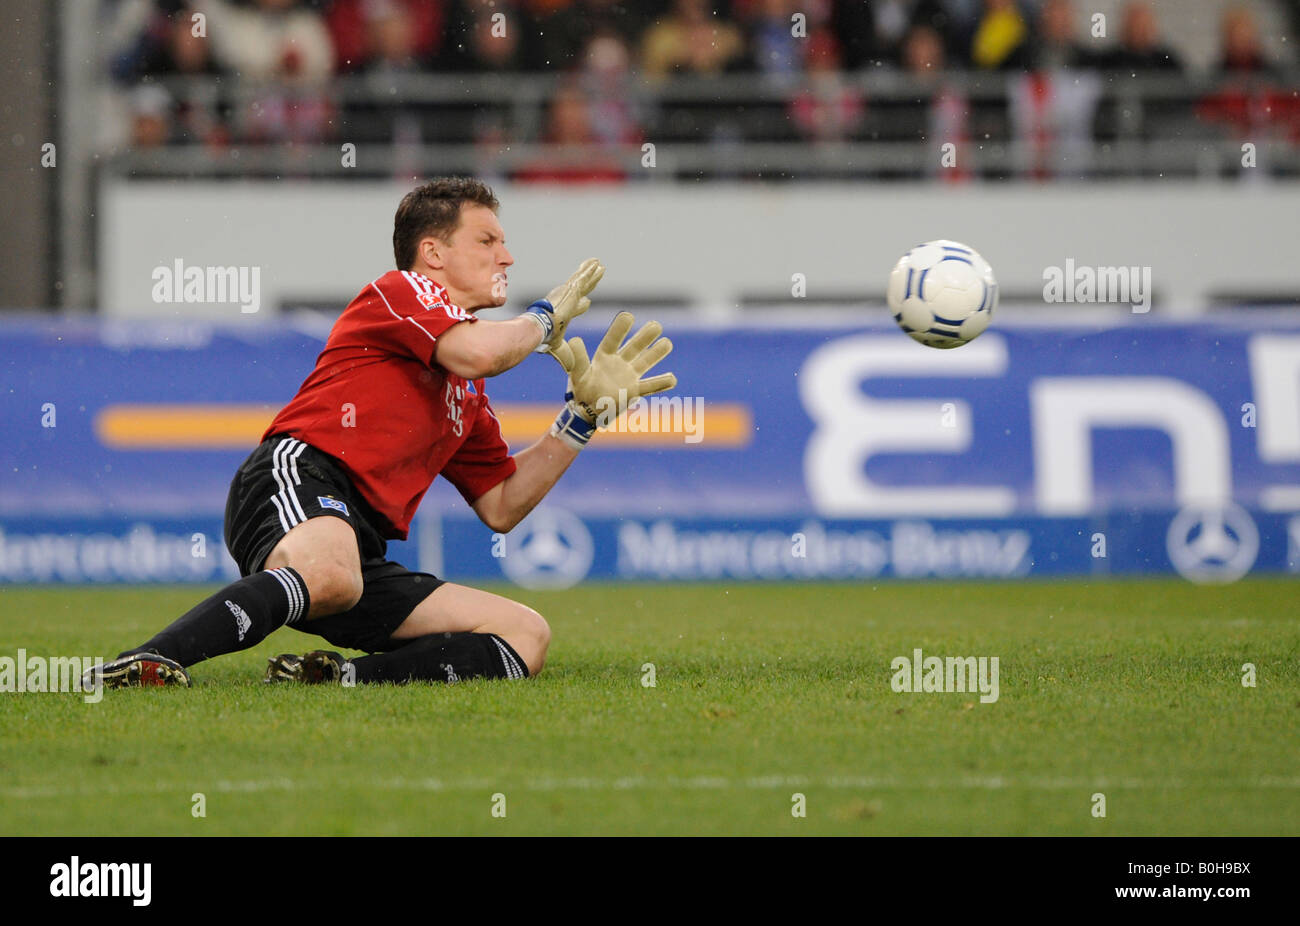 Goalkeeper Timo Rost fending off shot on goal, Hamburger SV football club Stock Photo